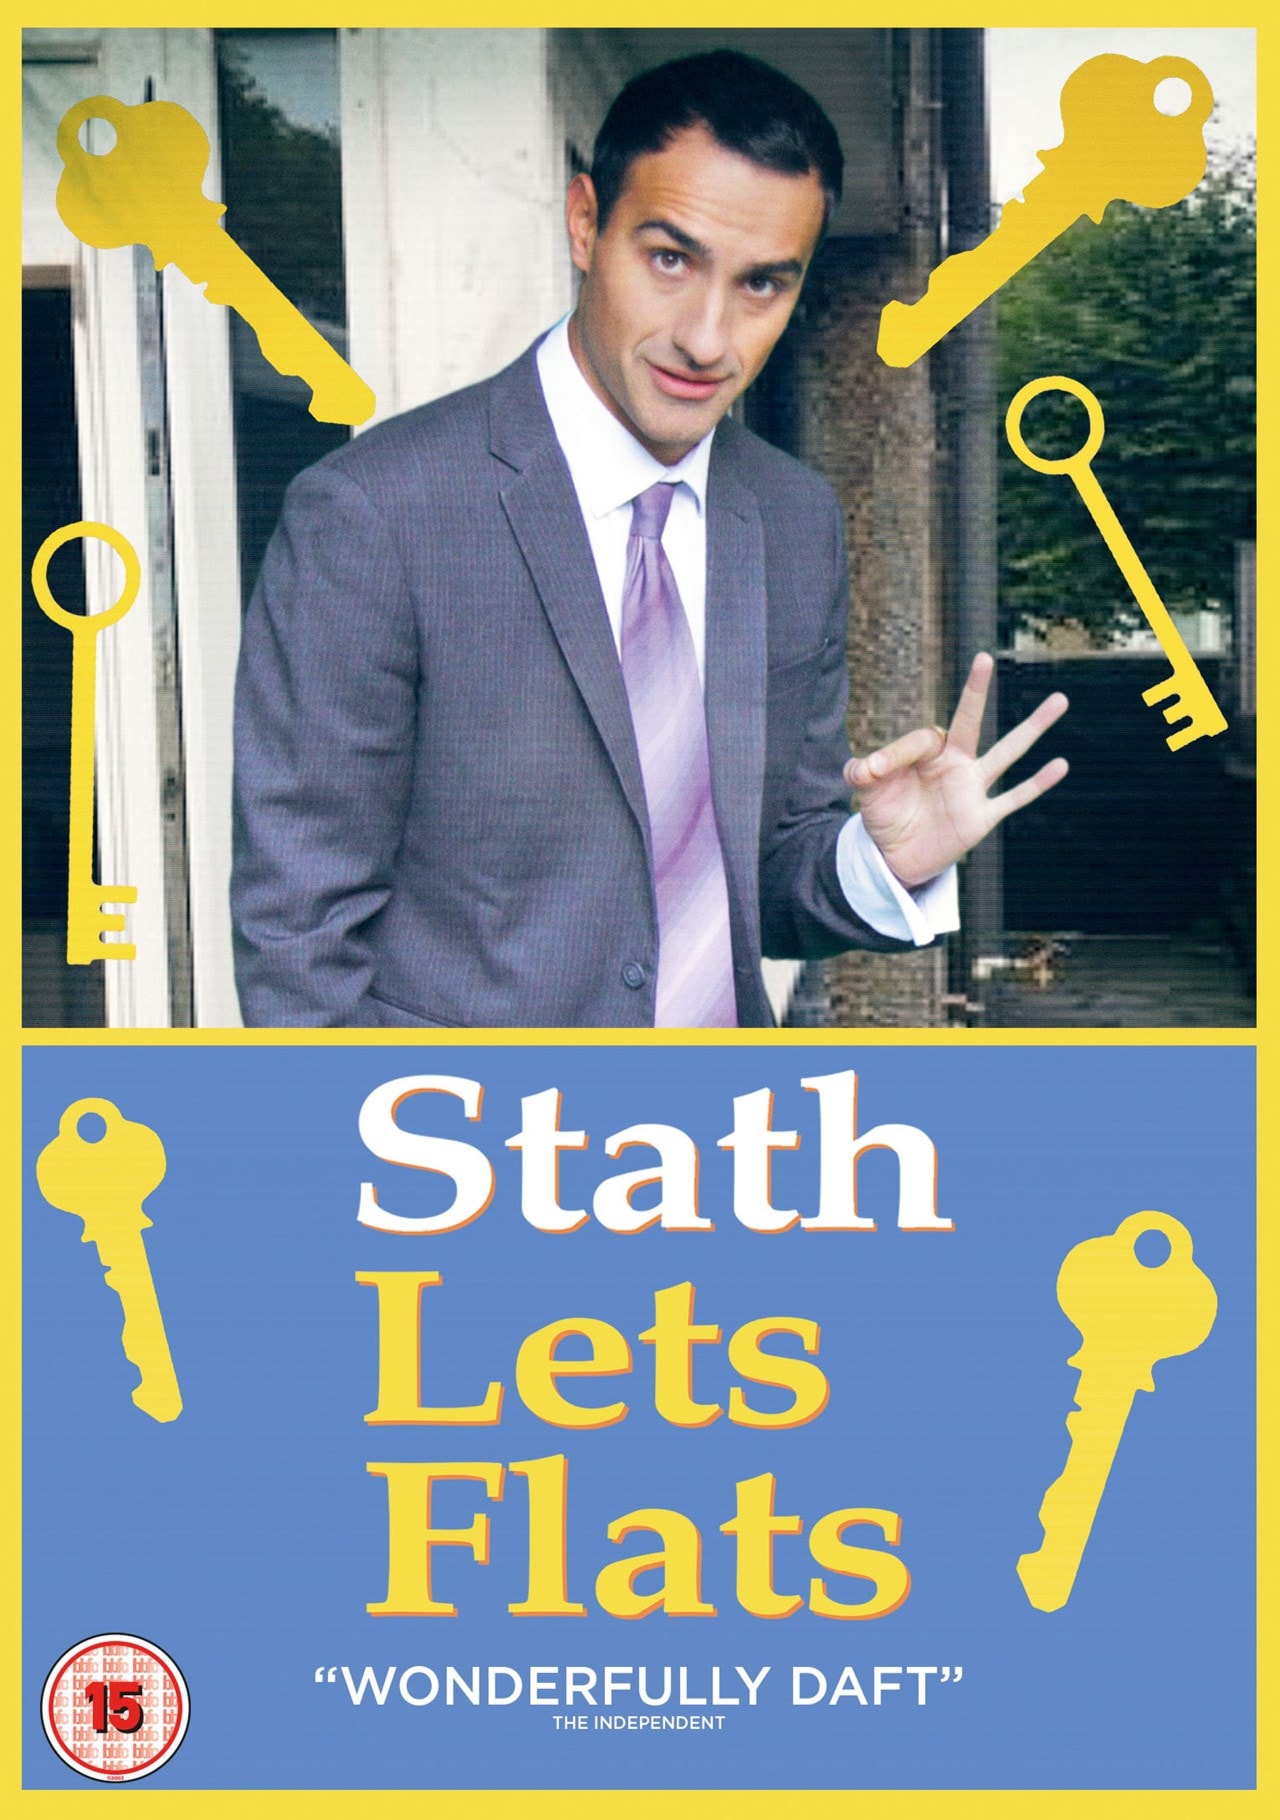 stath lets flats merch